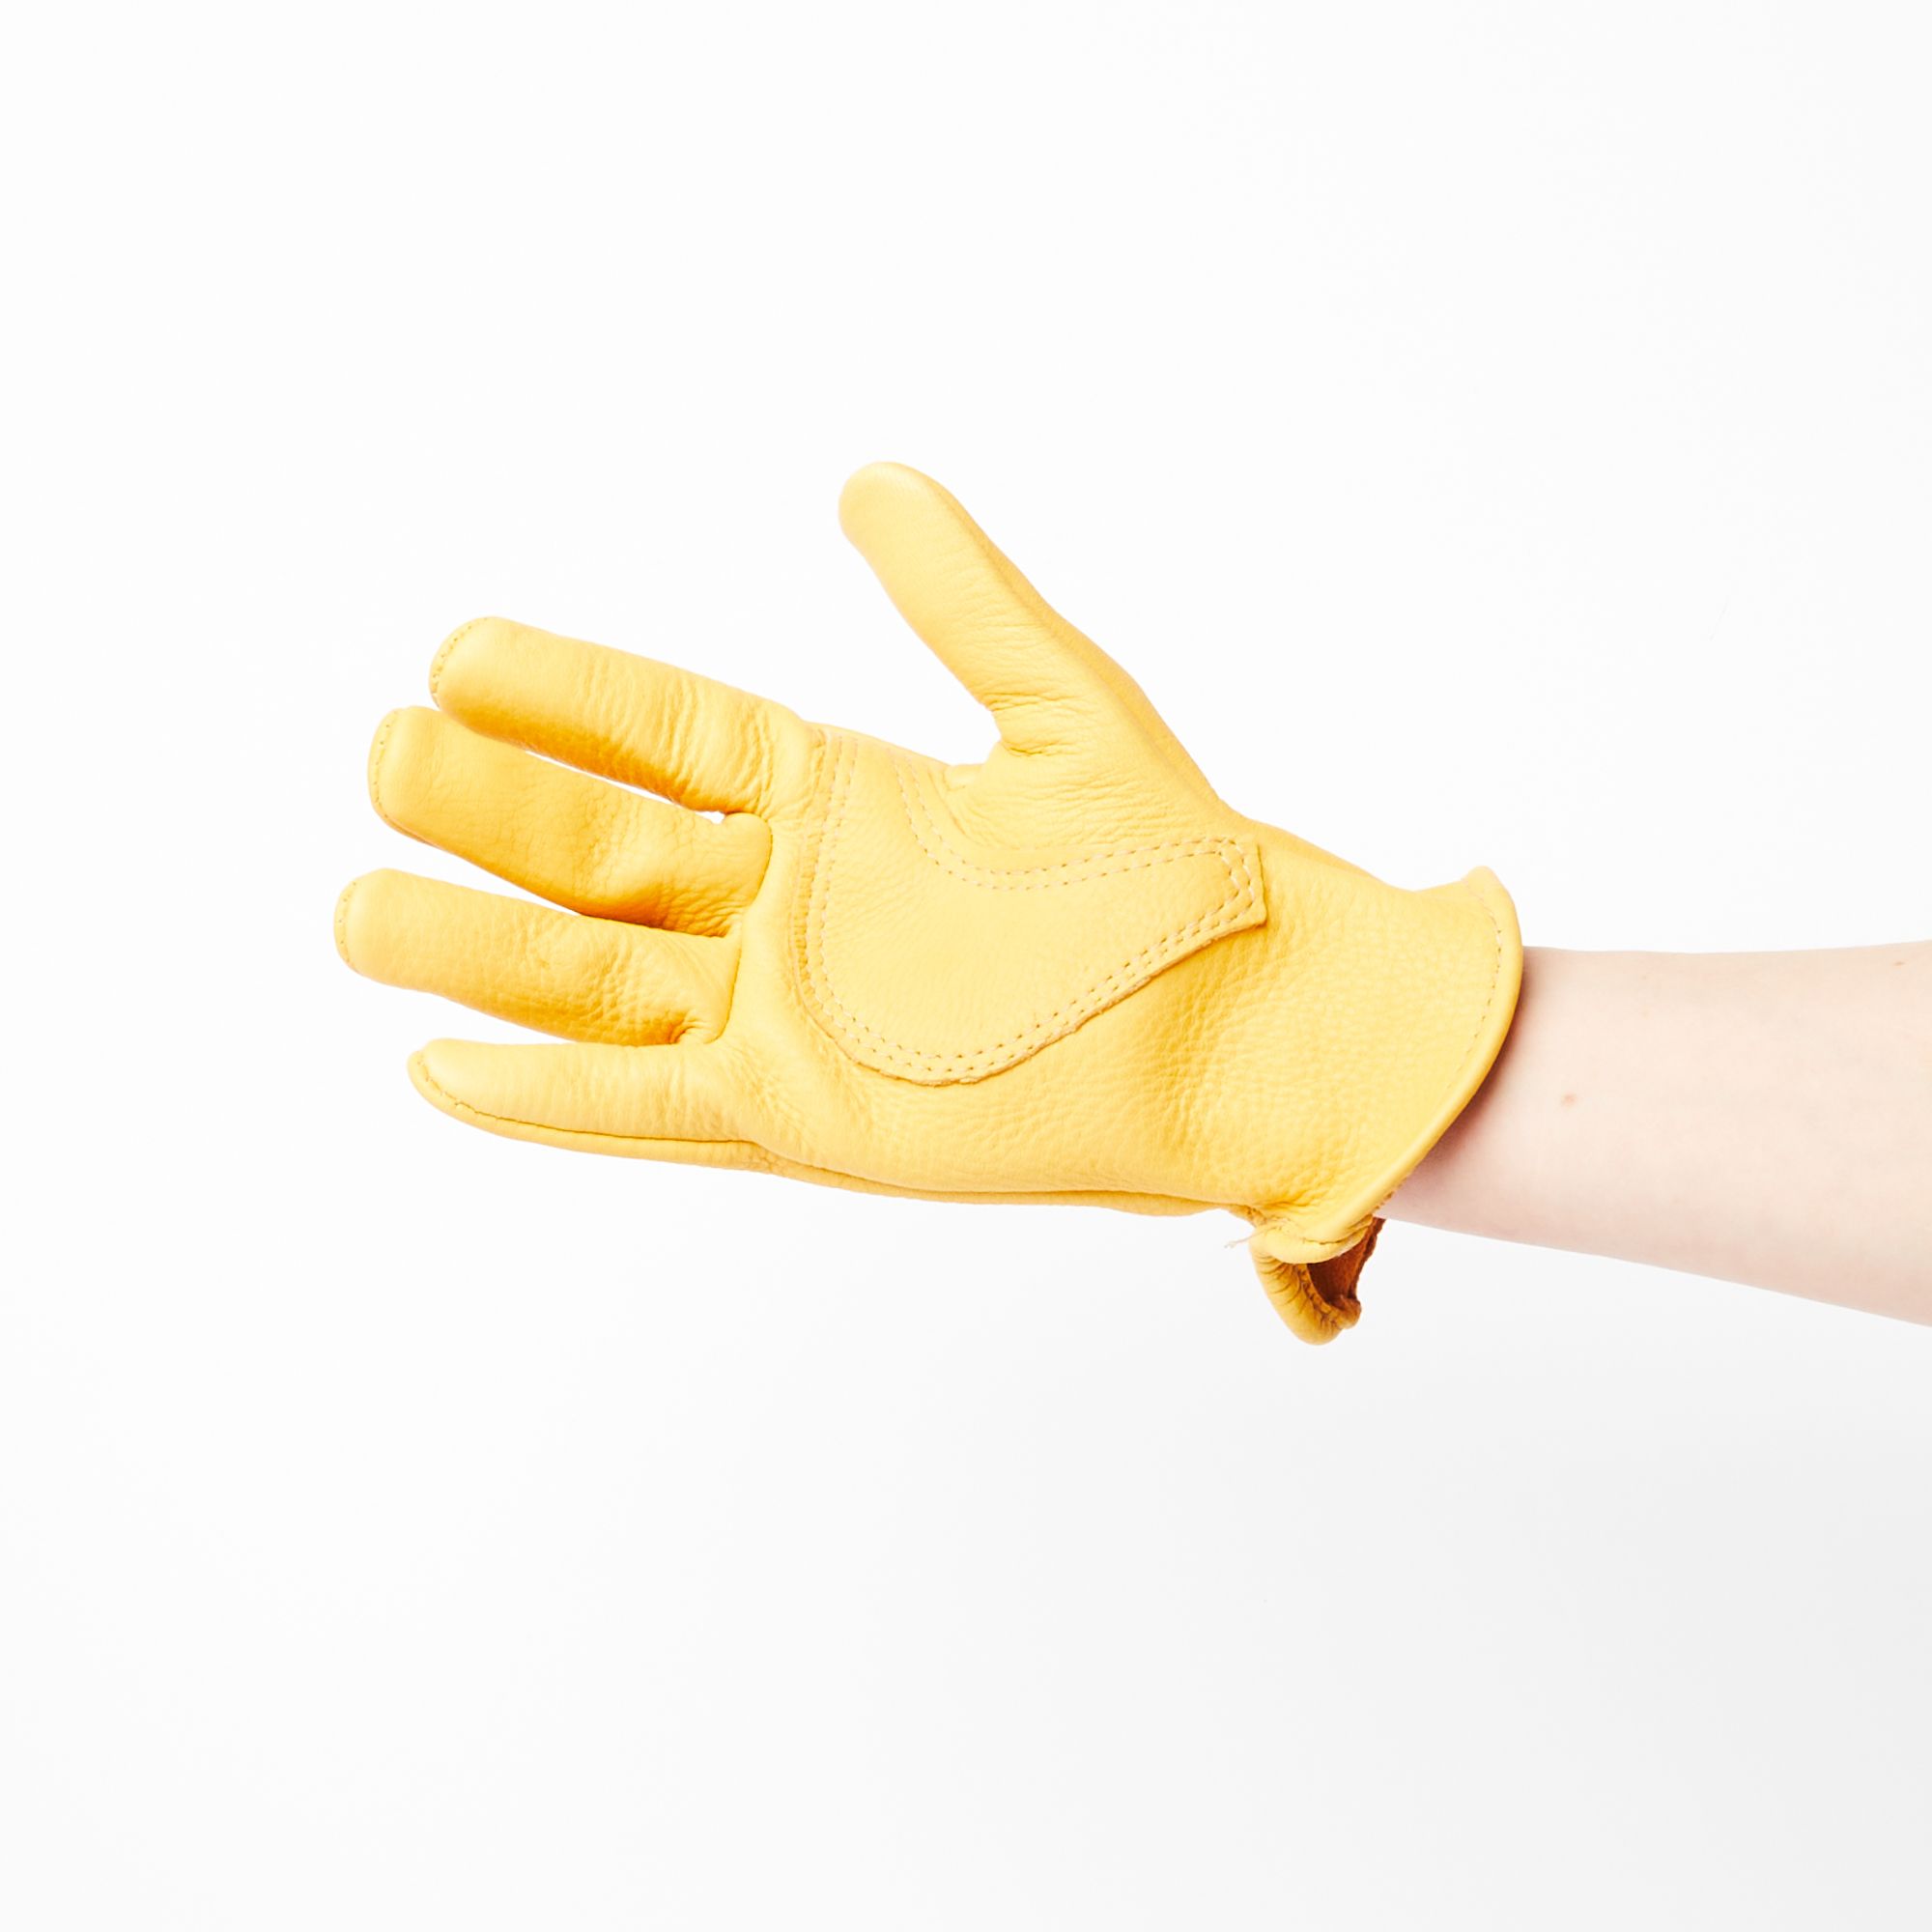 A hand wearing one buttery yellow deerskin garden glove